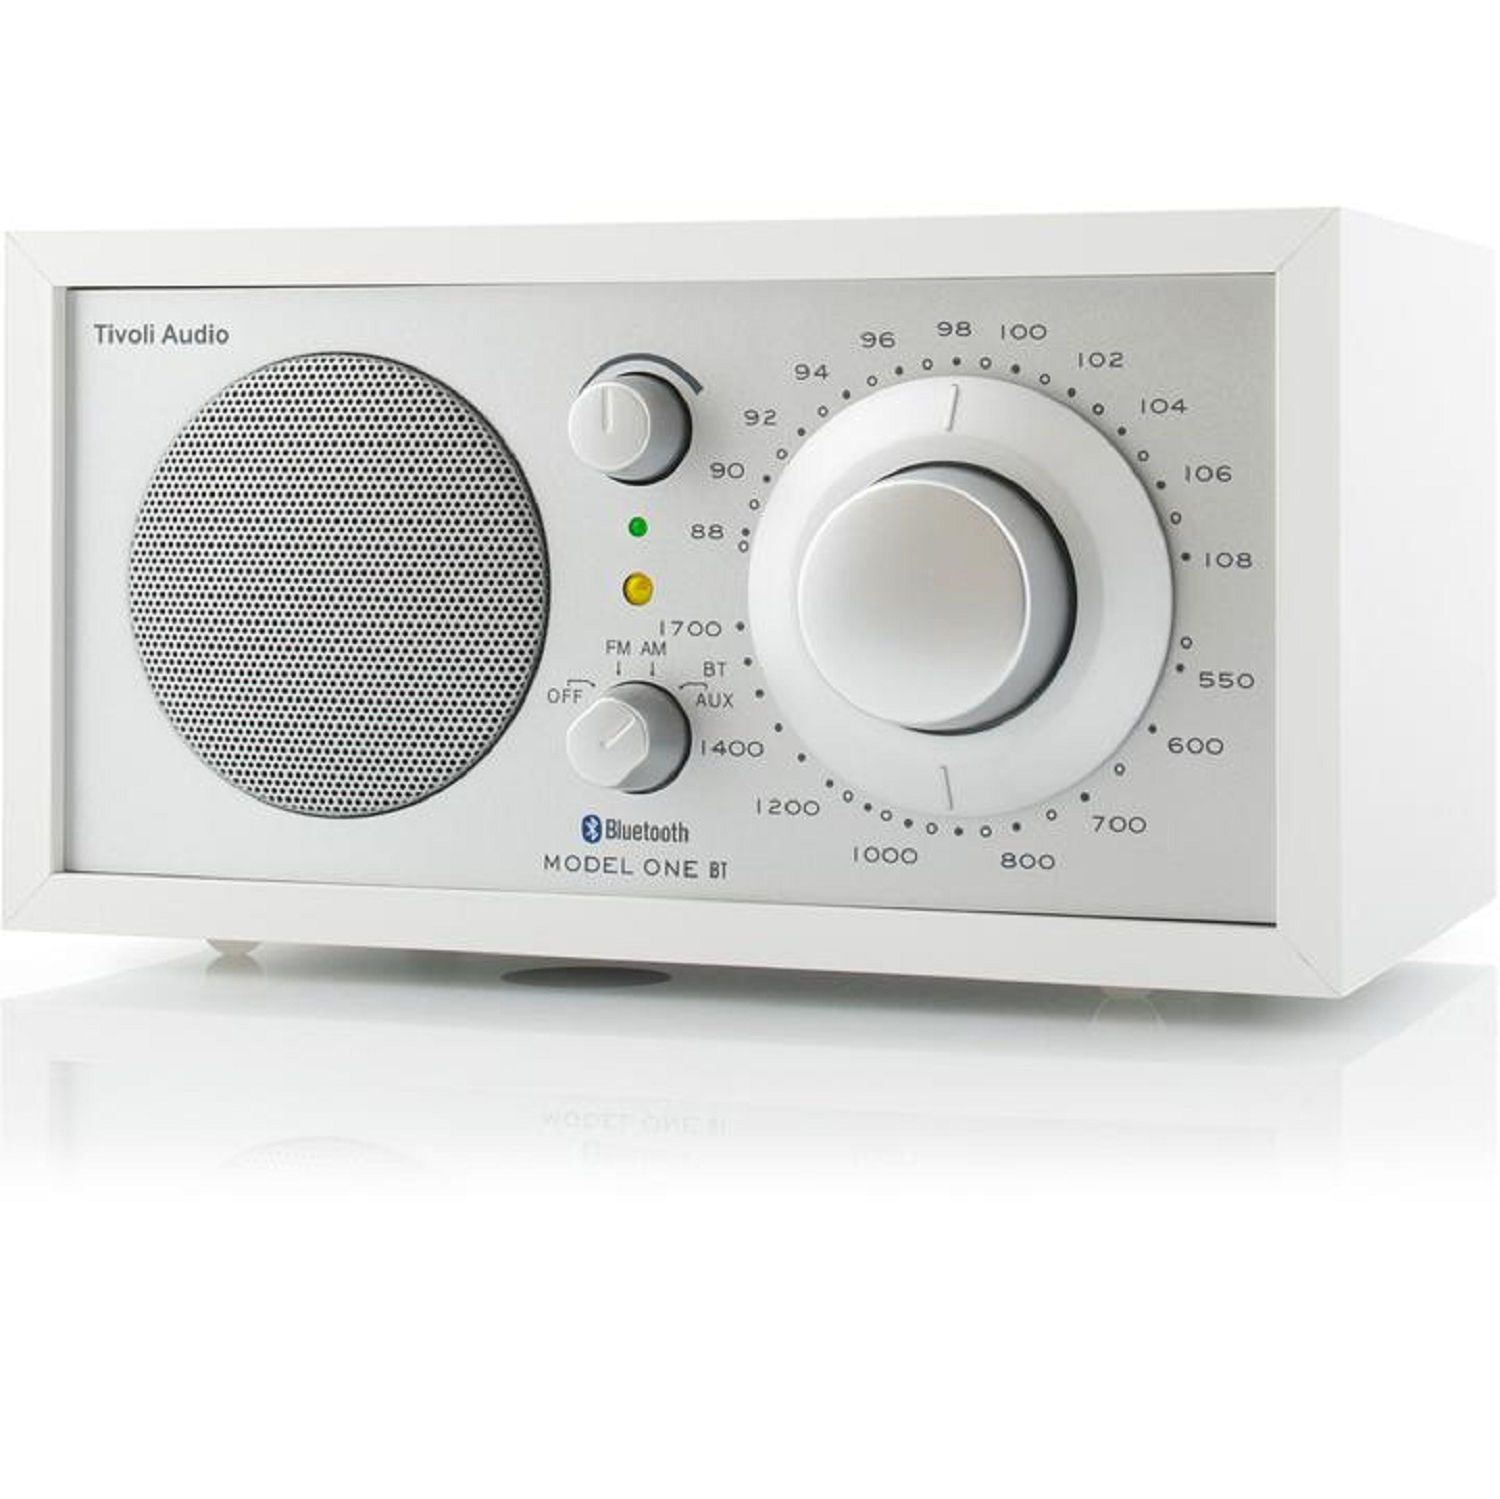 Tivoli Audio Model One BT Bluetooth AM/FM Radio (white /Cherry 